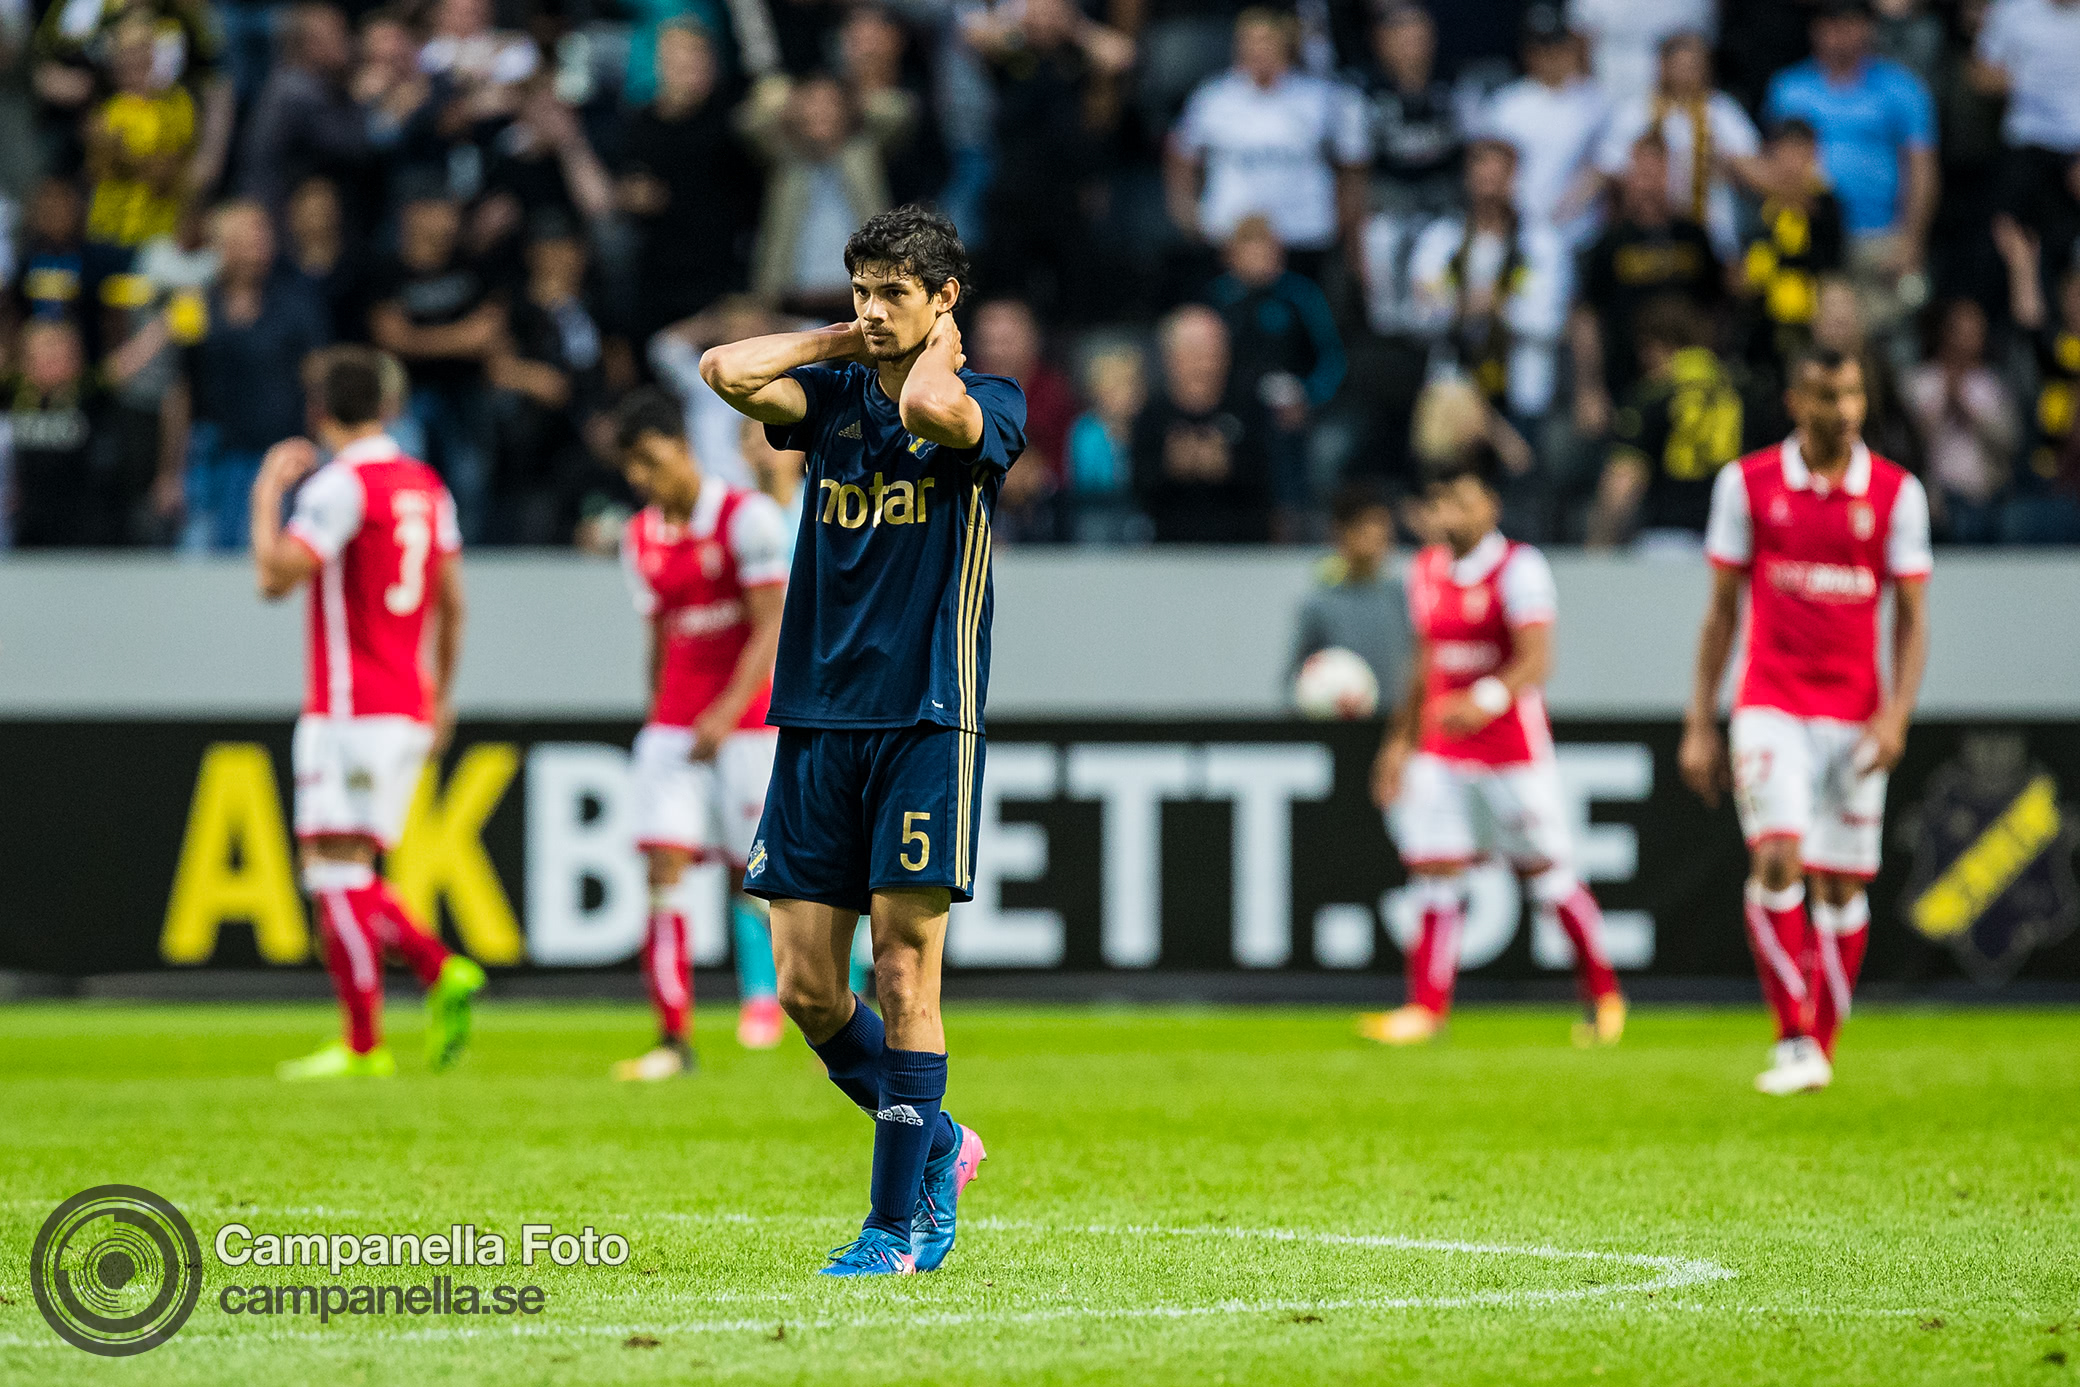 Sundgren penalty keeps hope alive for AIK - Michael Campanella Photography